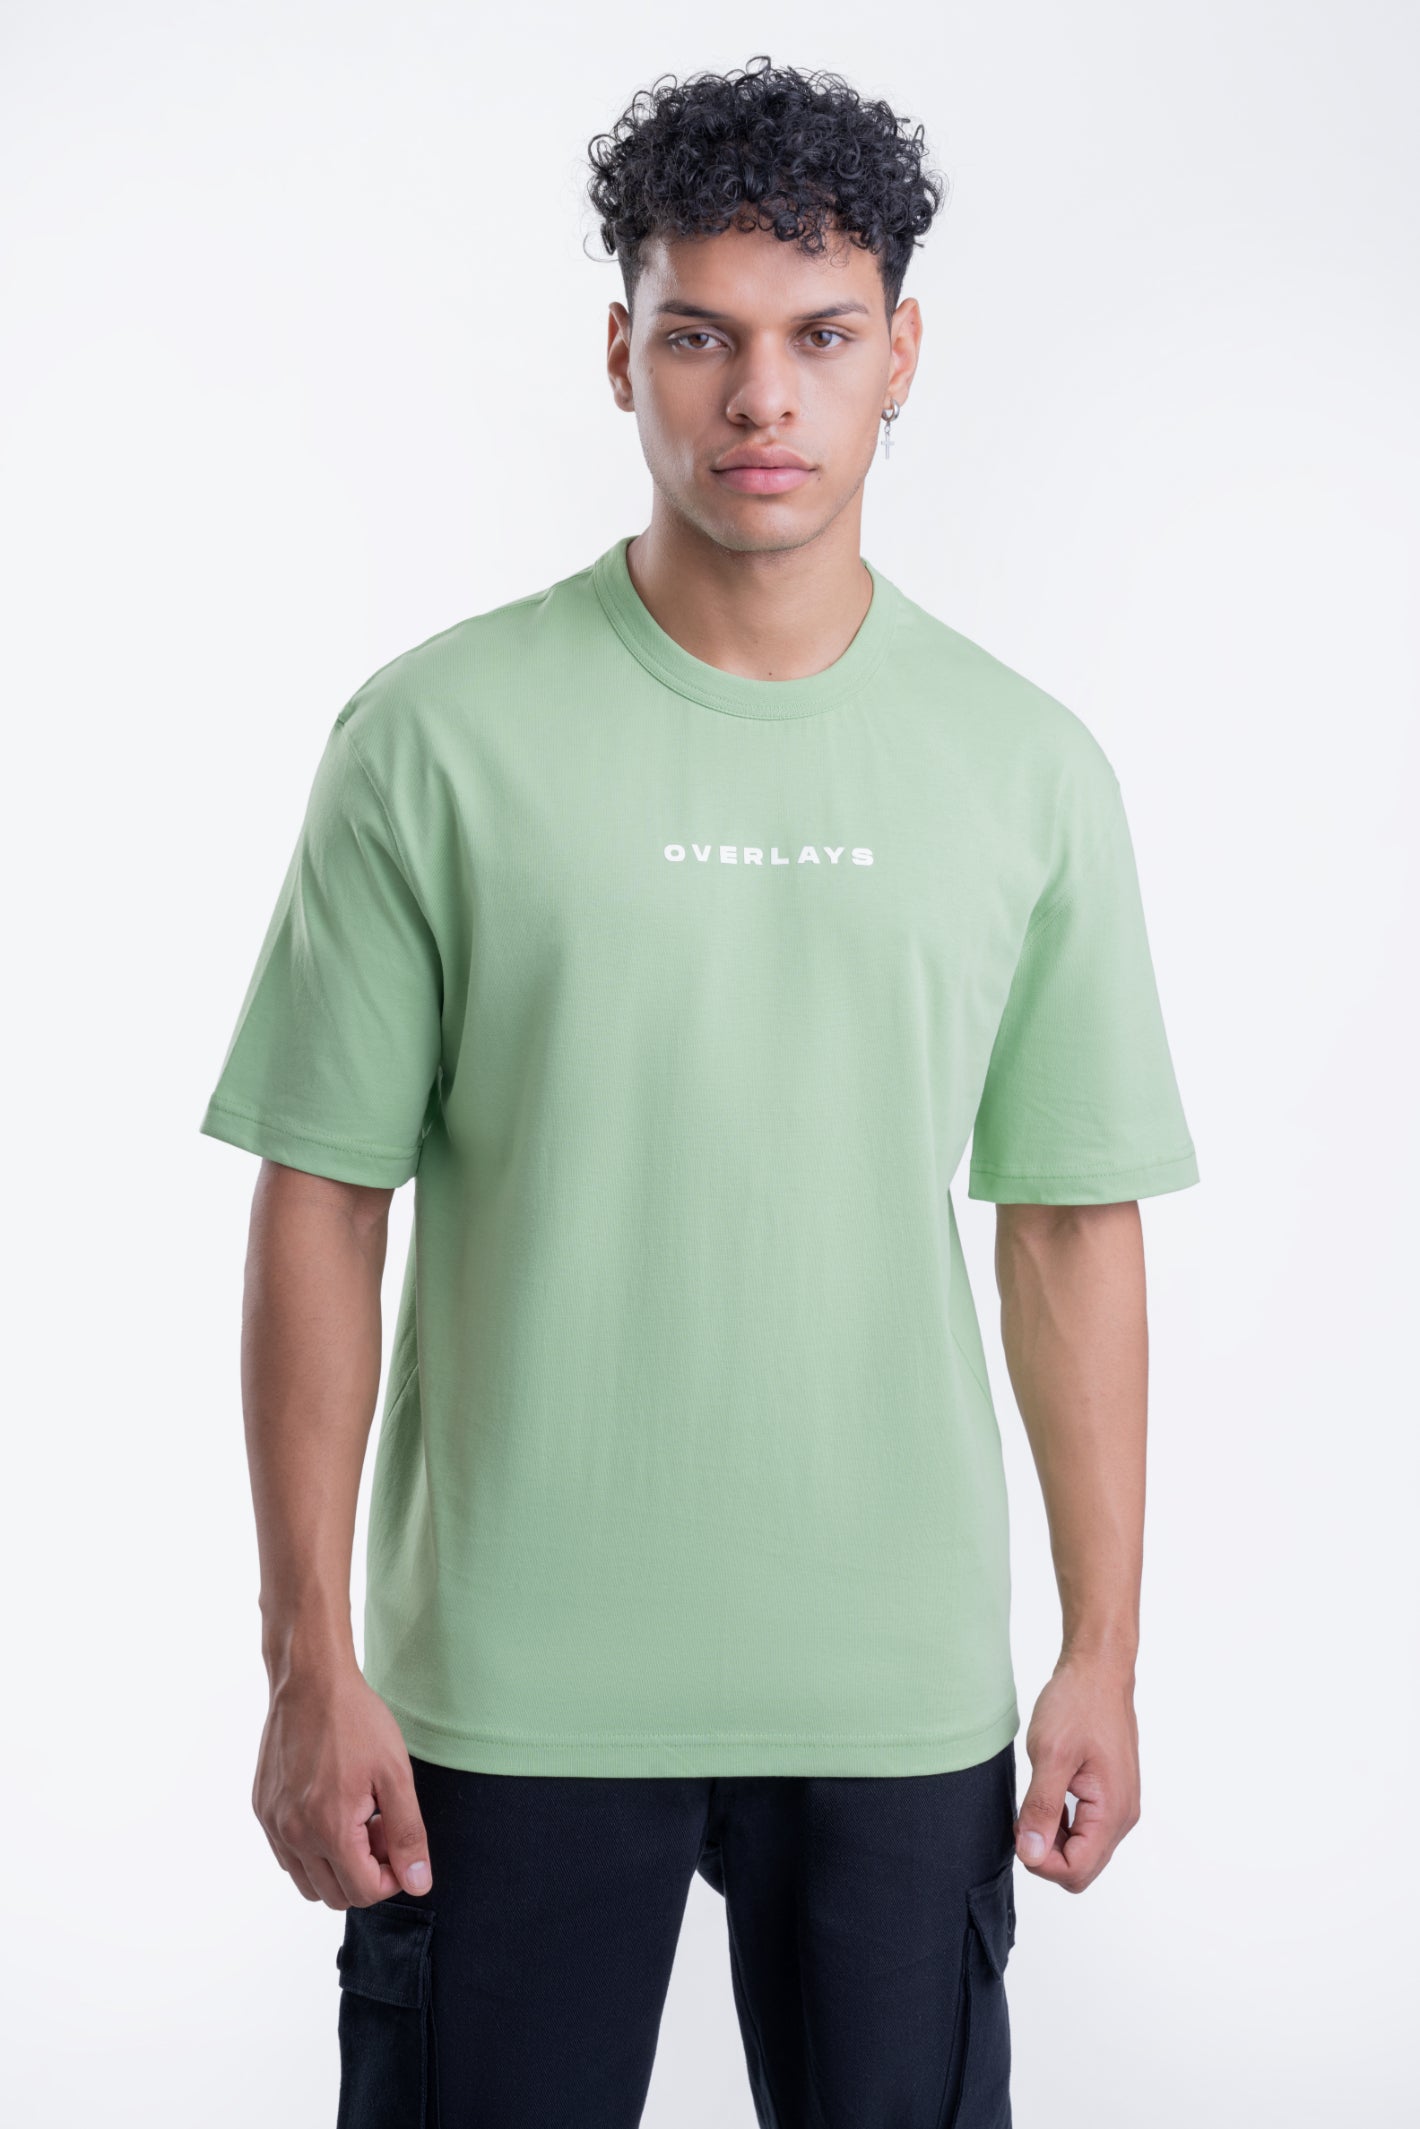 Relaxed Fit Men's Free Spirit Tshirt - Green